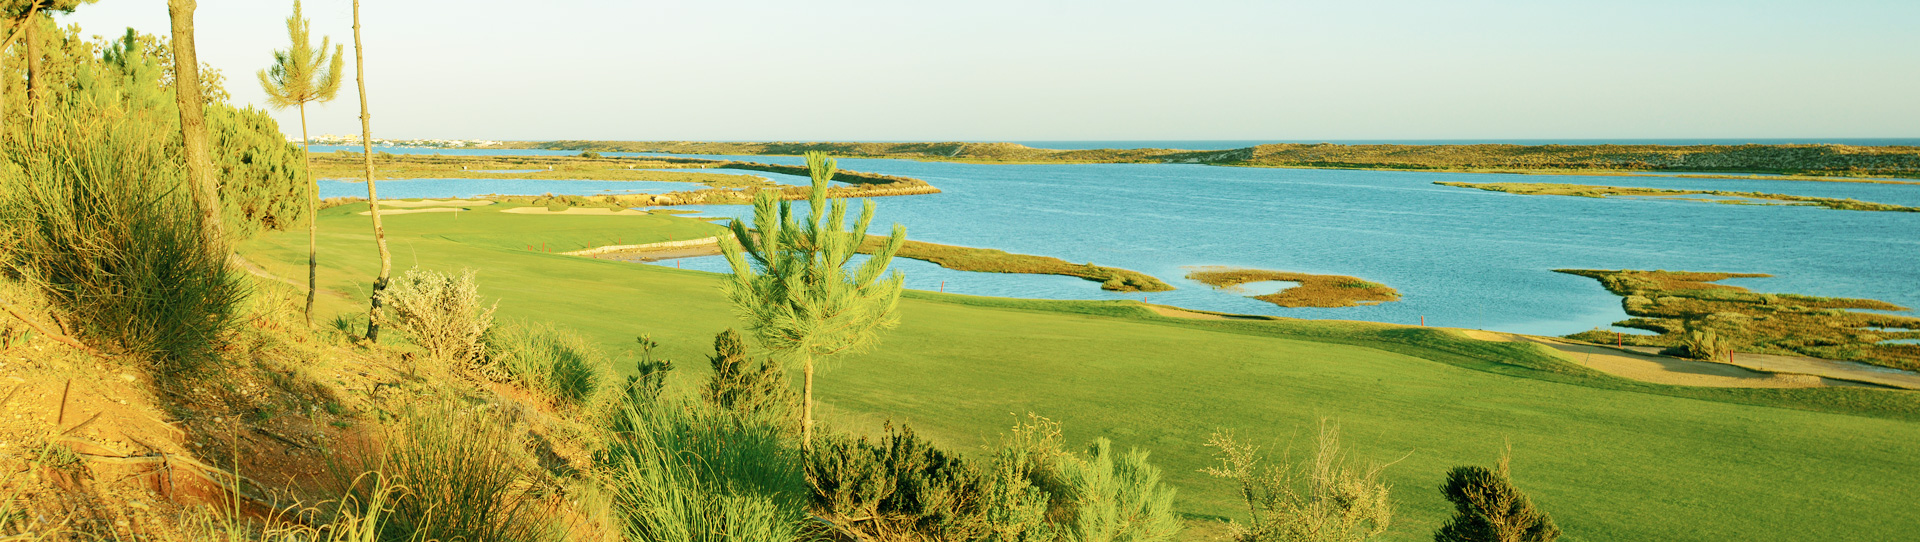 Portugal golf courses - San Lorenzo Golf Course - Photo 3